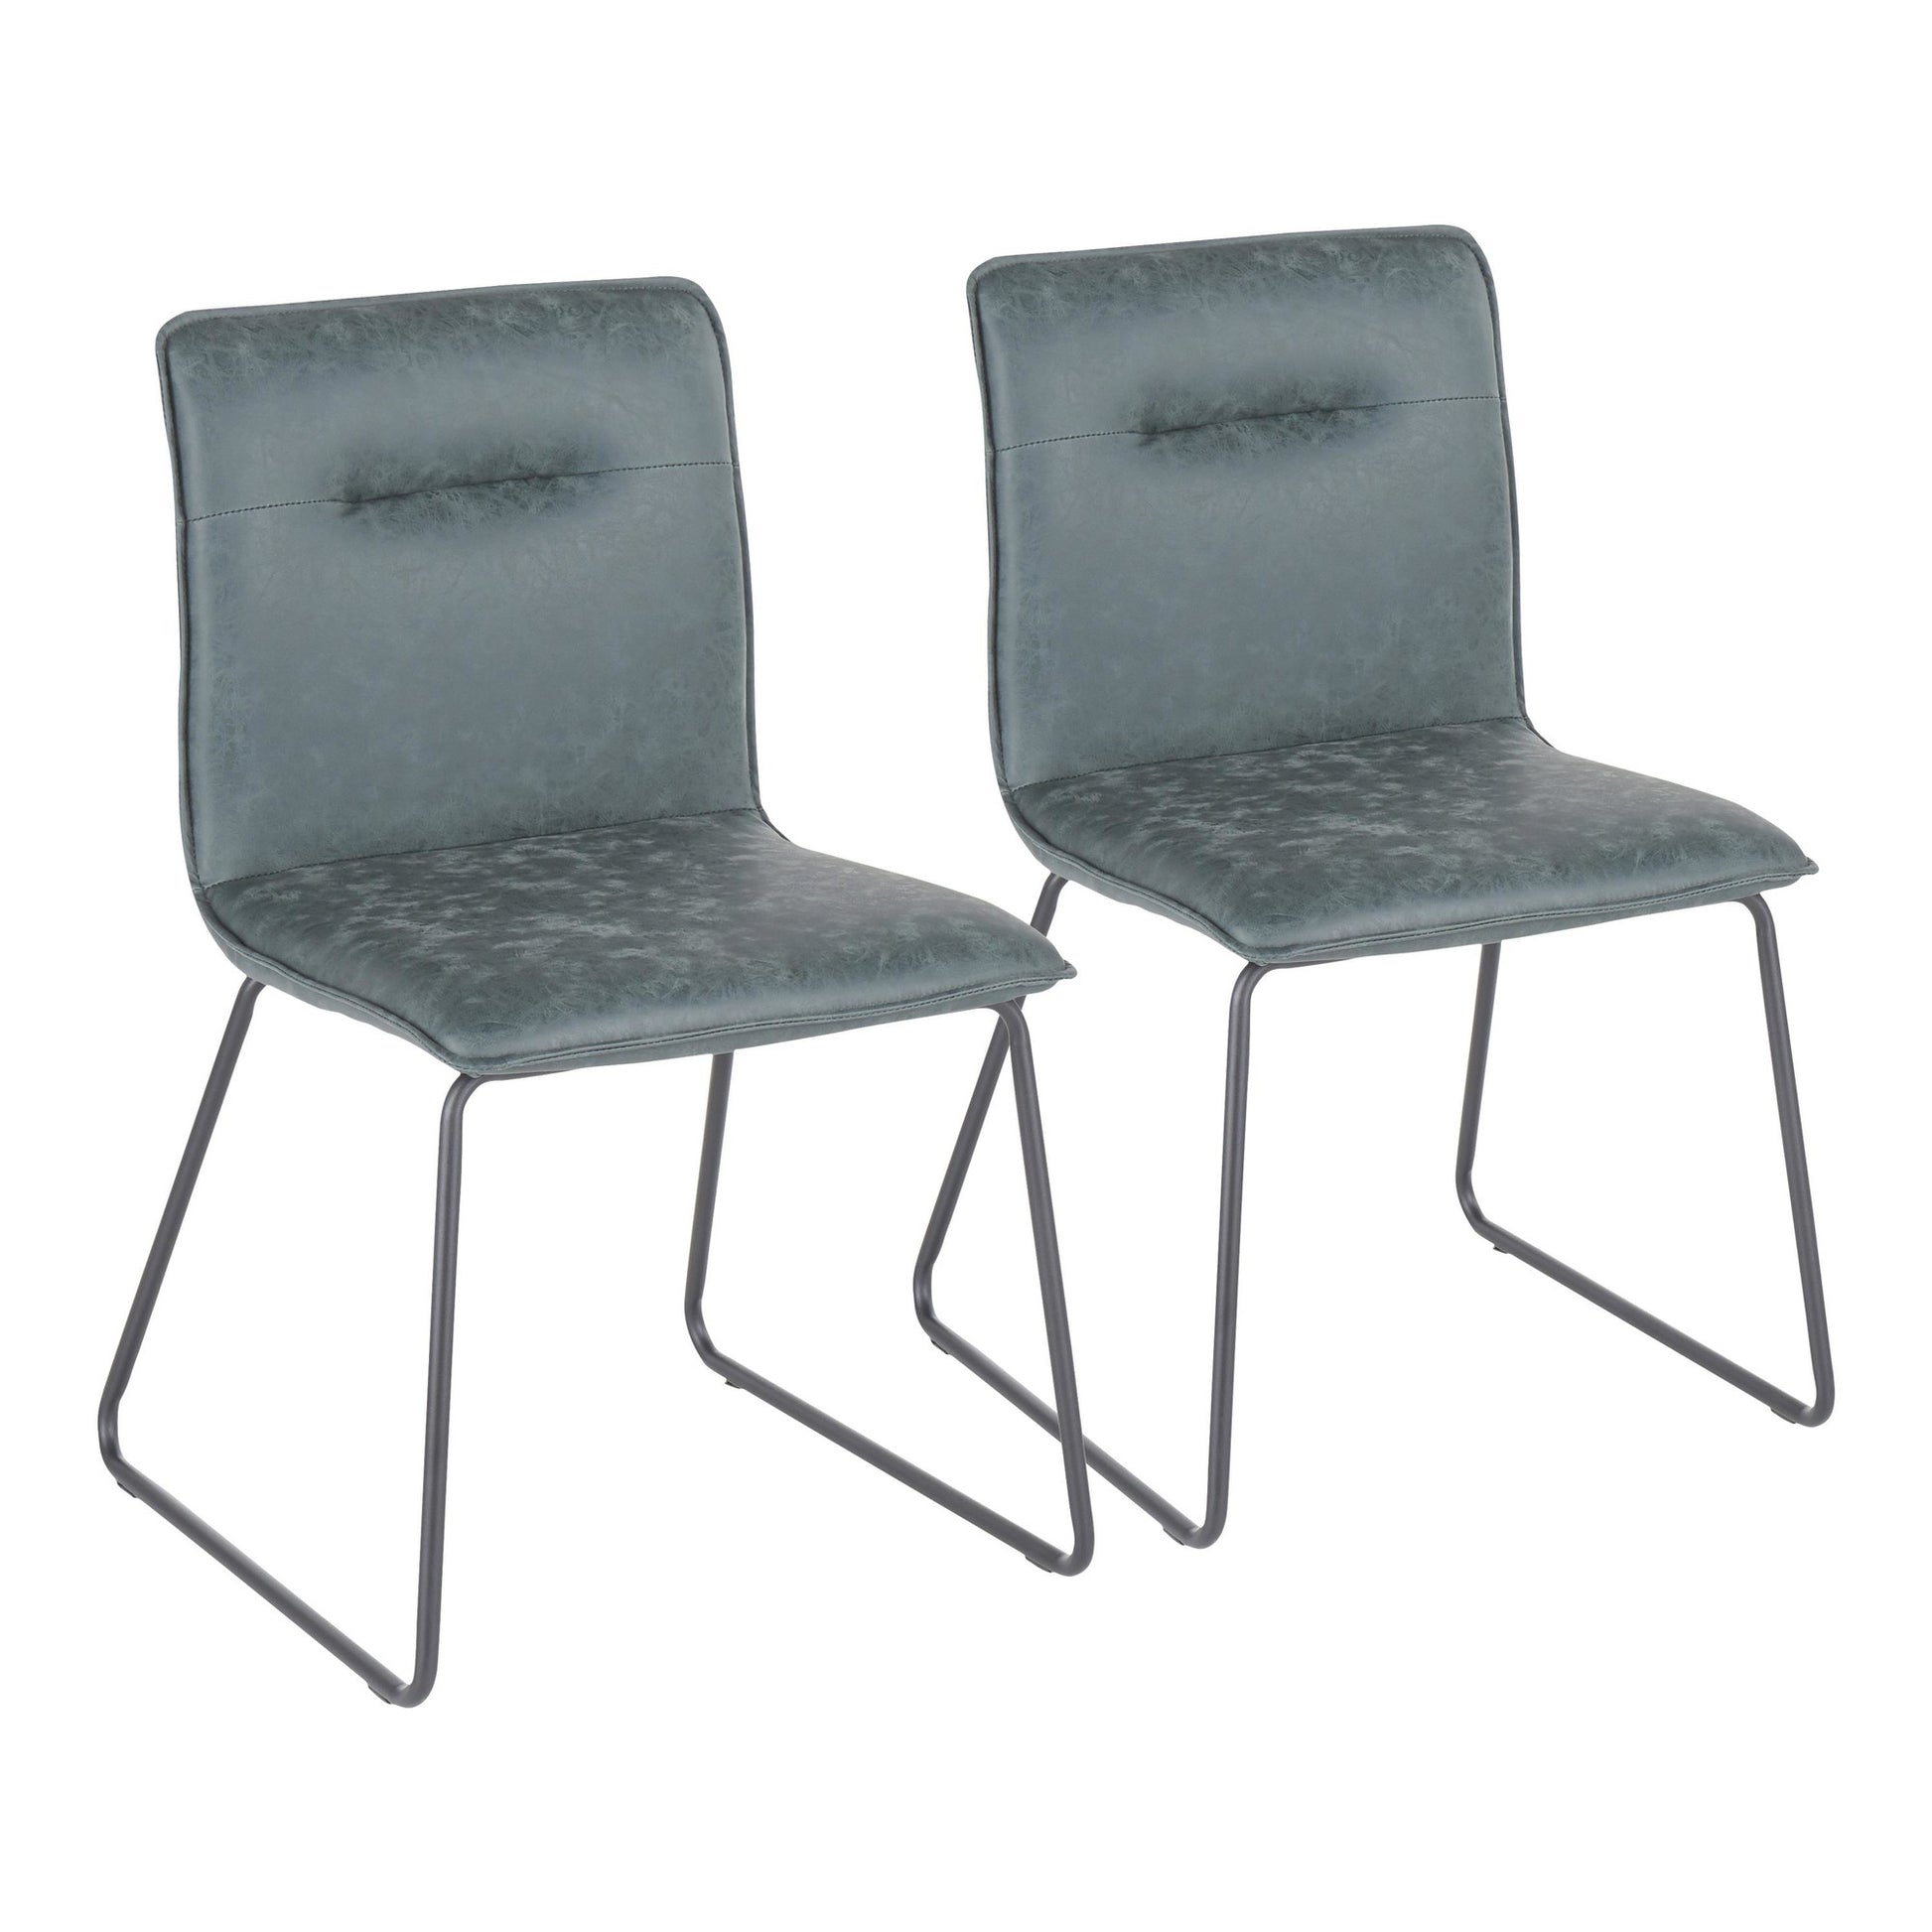 LumiSource Casper Chair - Set of 2-30